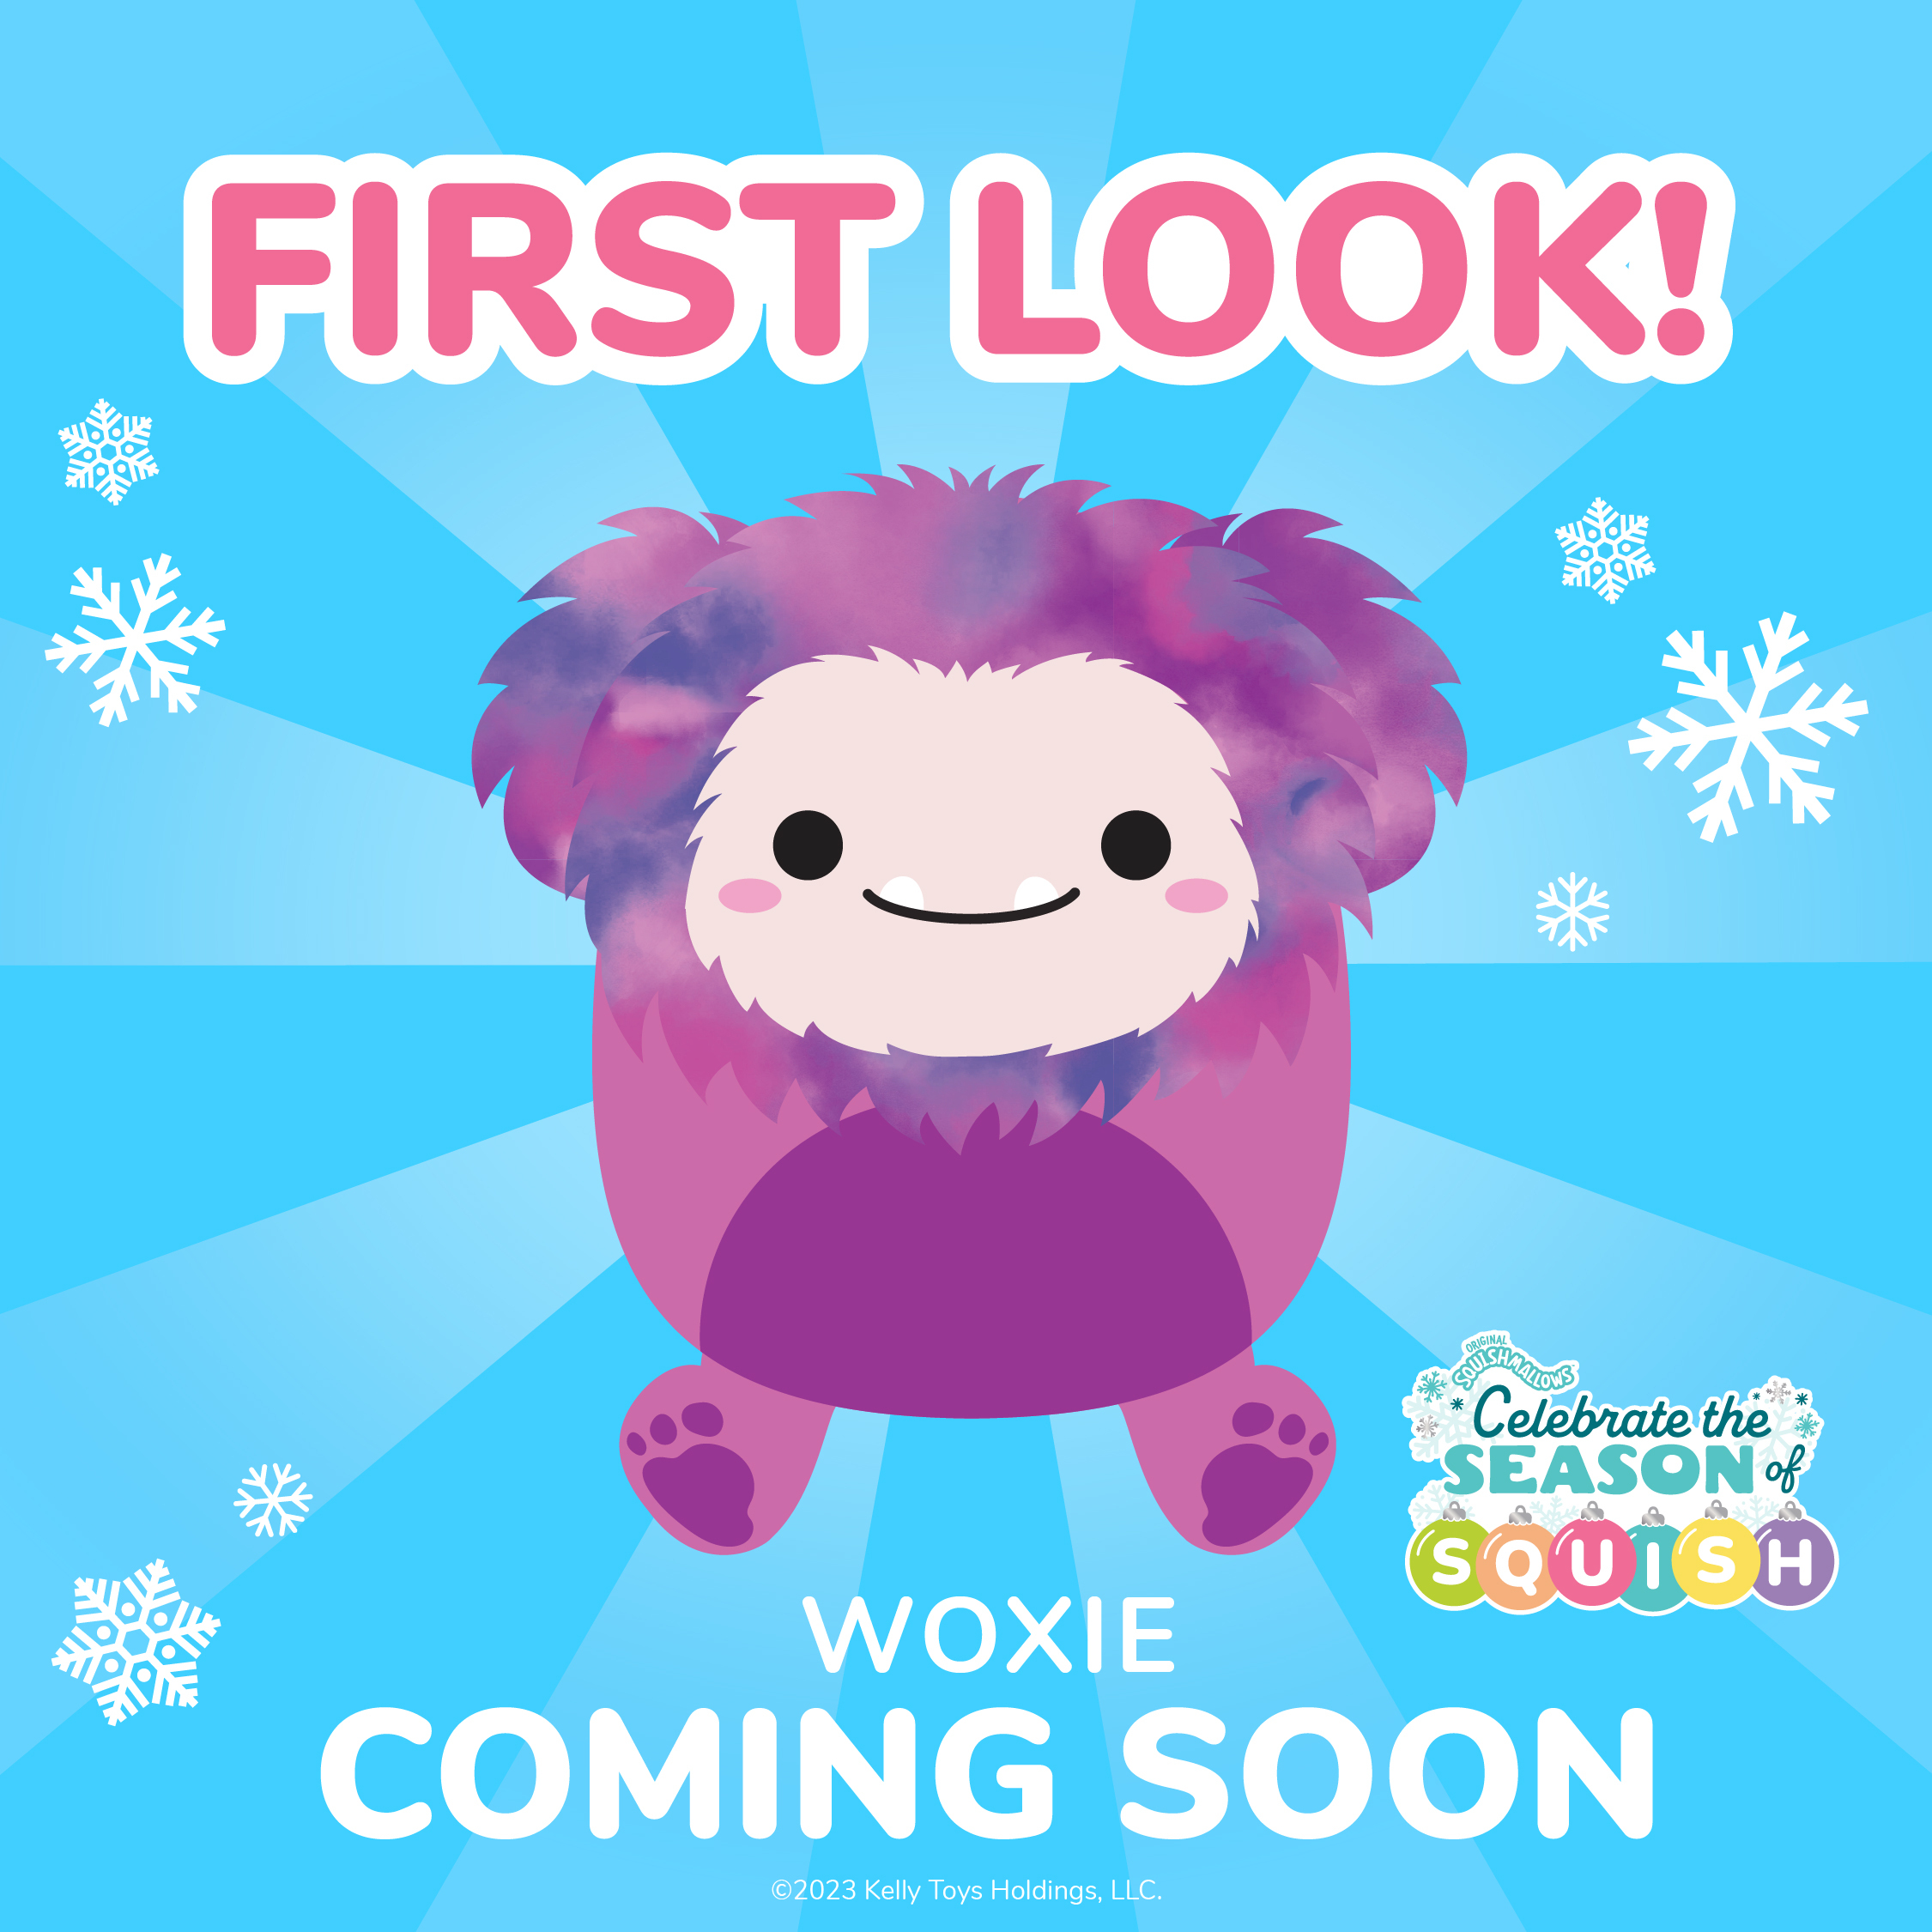 CozyCon 09/2022 - My Sloth Marshmellow Is Cute! by ChevronTheWolf